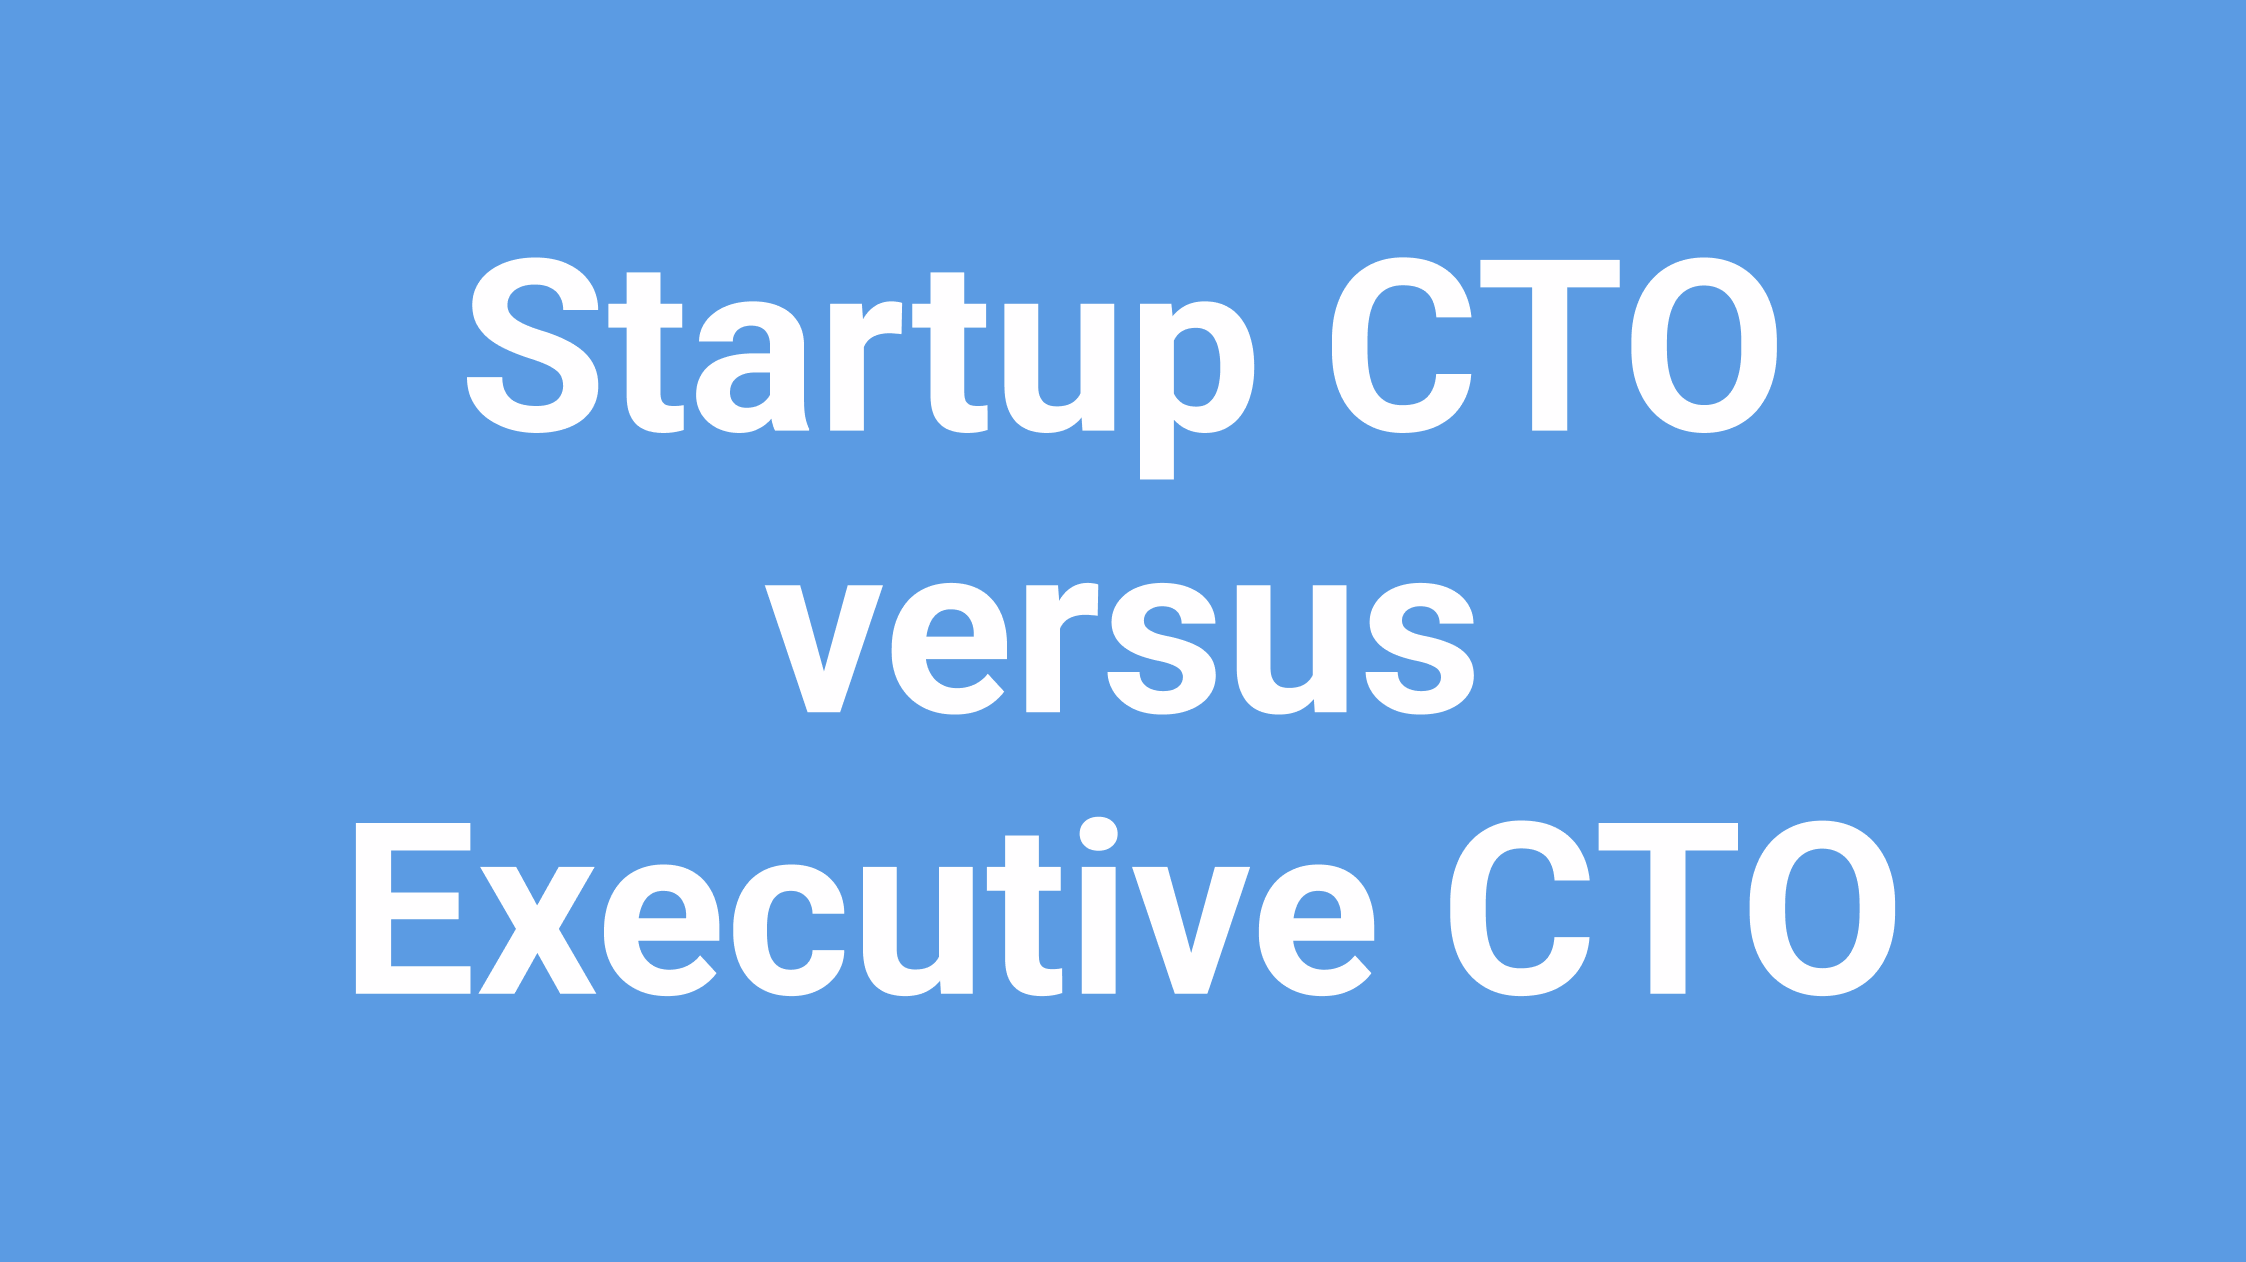 Startup CTO versus Executive CTO